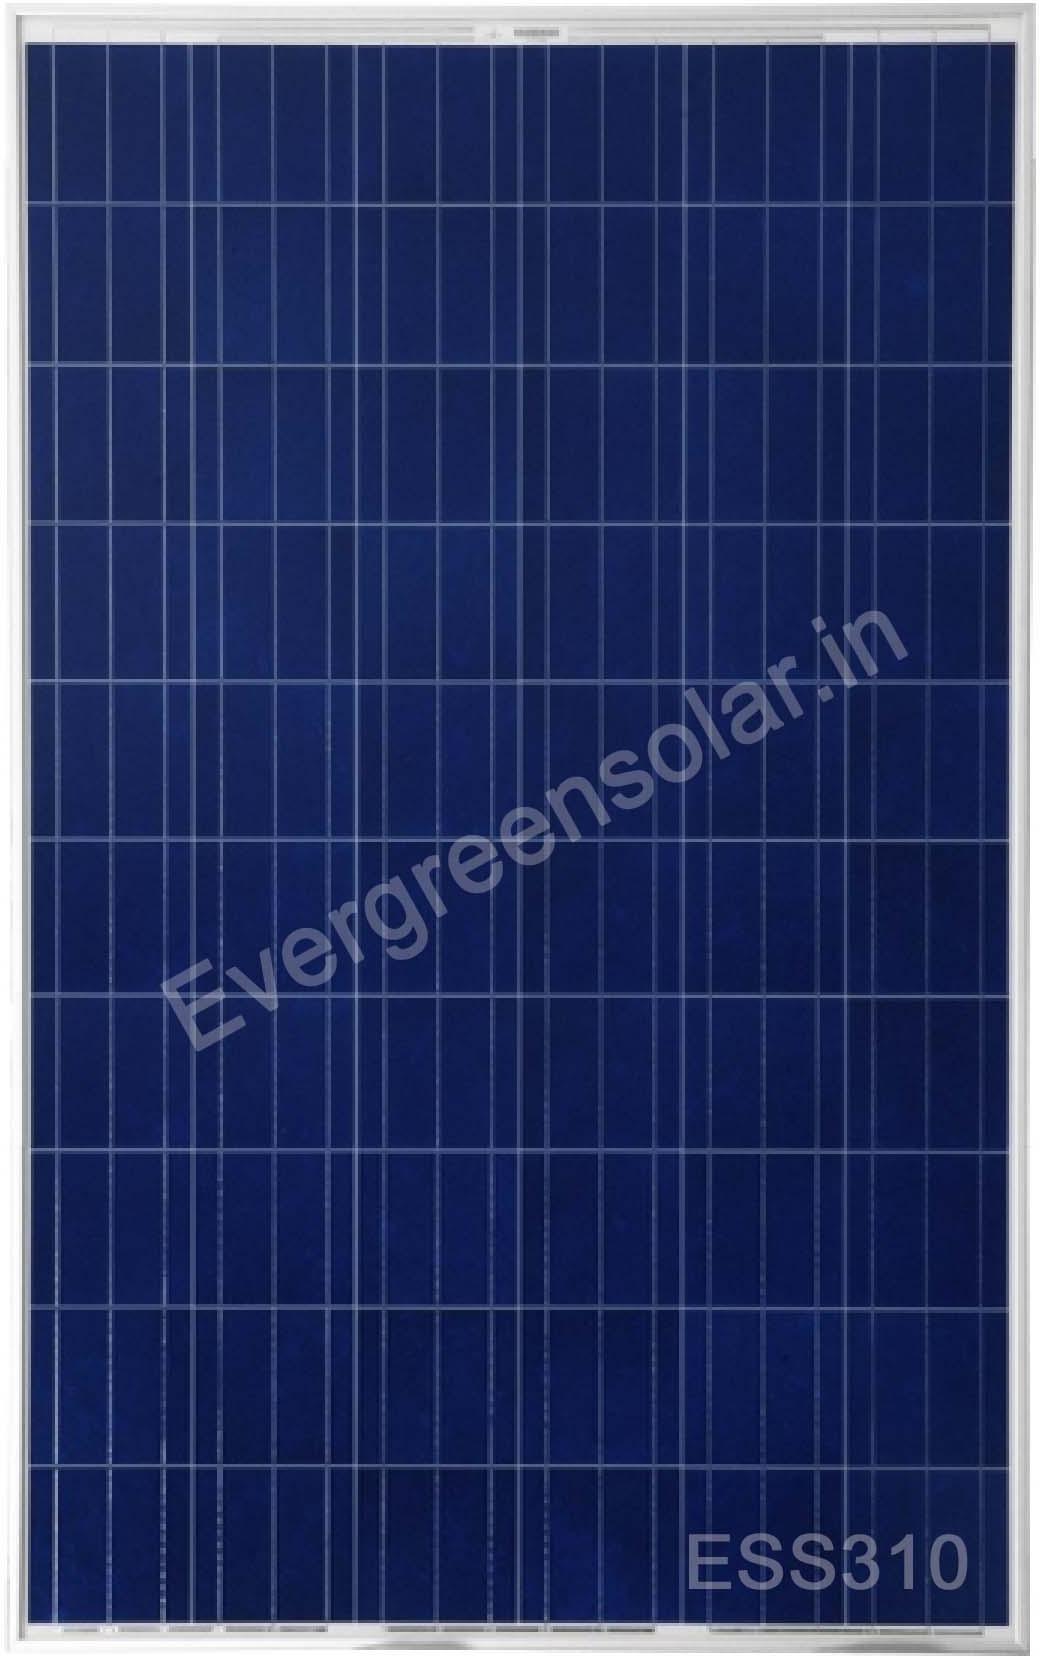 310wp Solar Photovoltaic Polycrystalline Panels